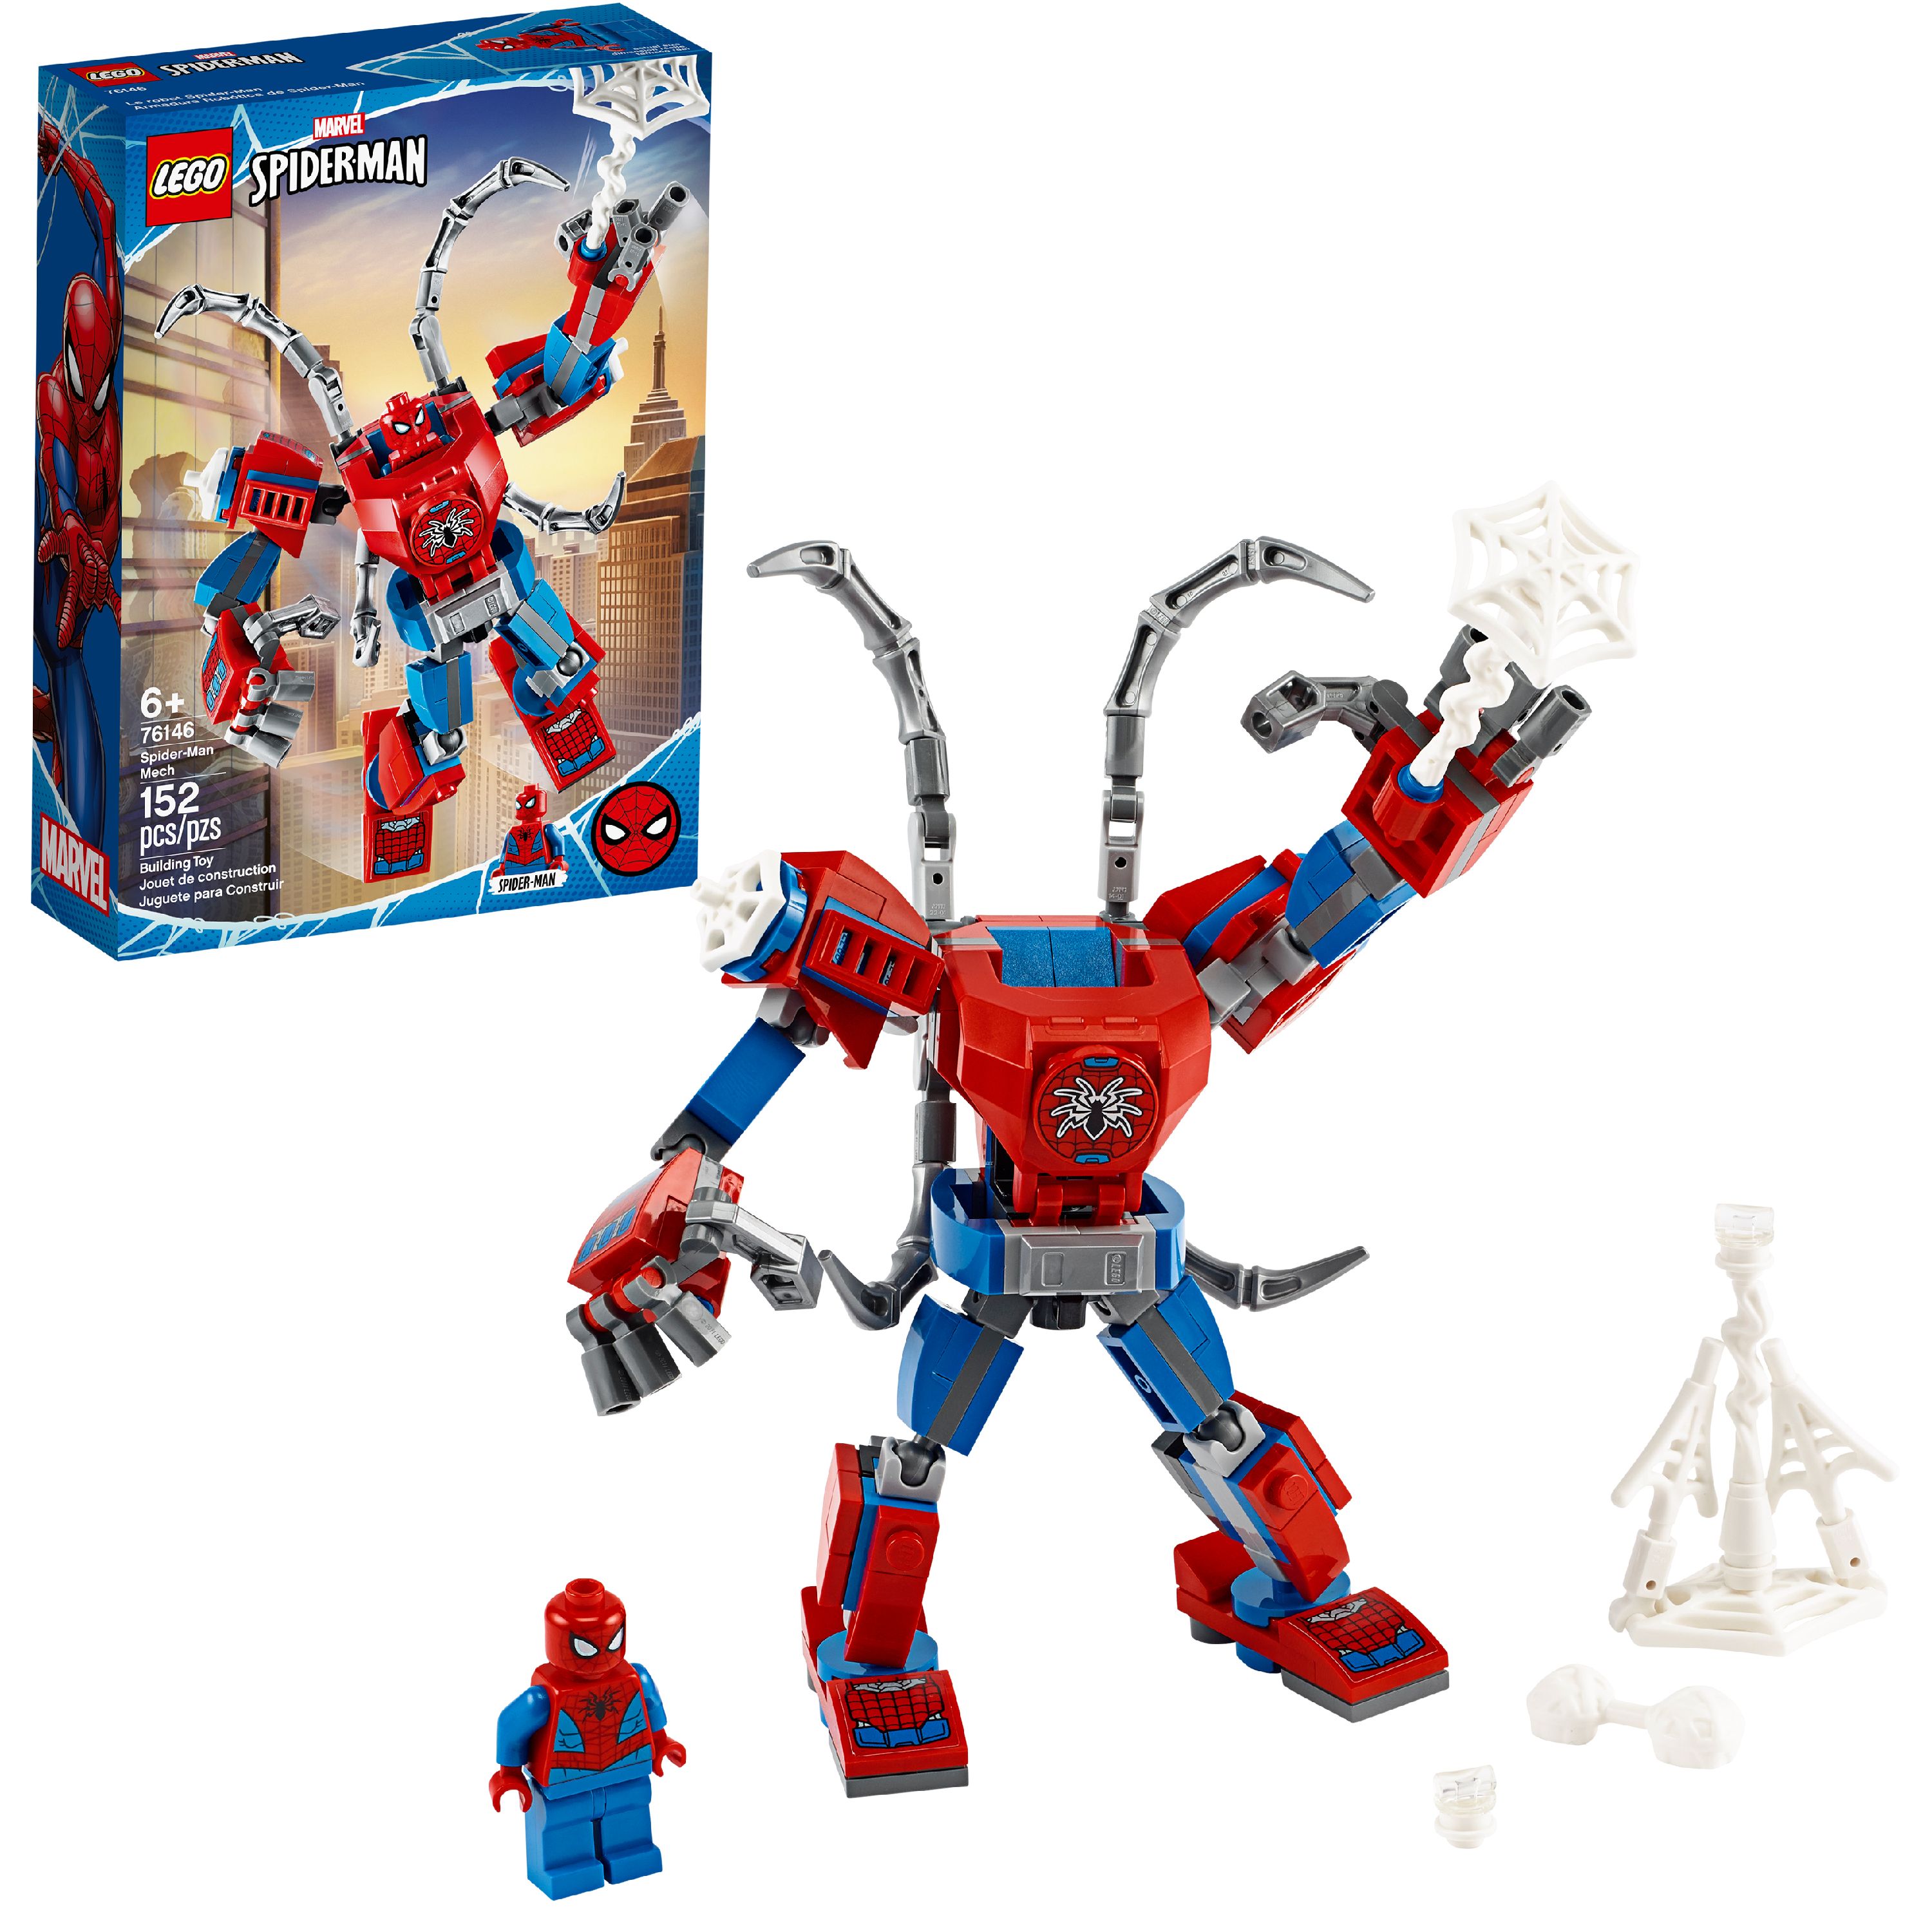 LEGO Spider-Man Mech 76146 Building Set (152 Pieces) - image 1 of 7